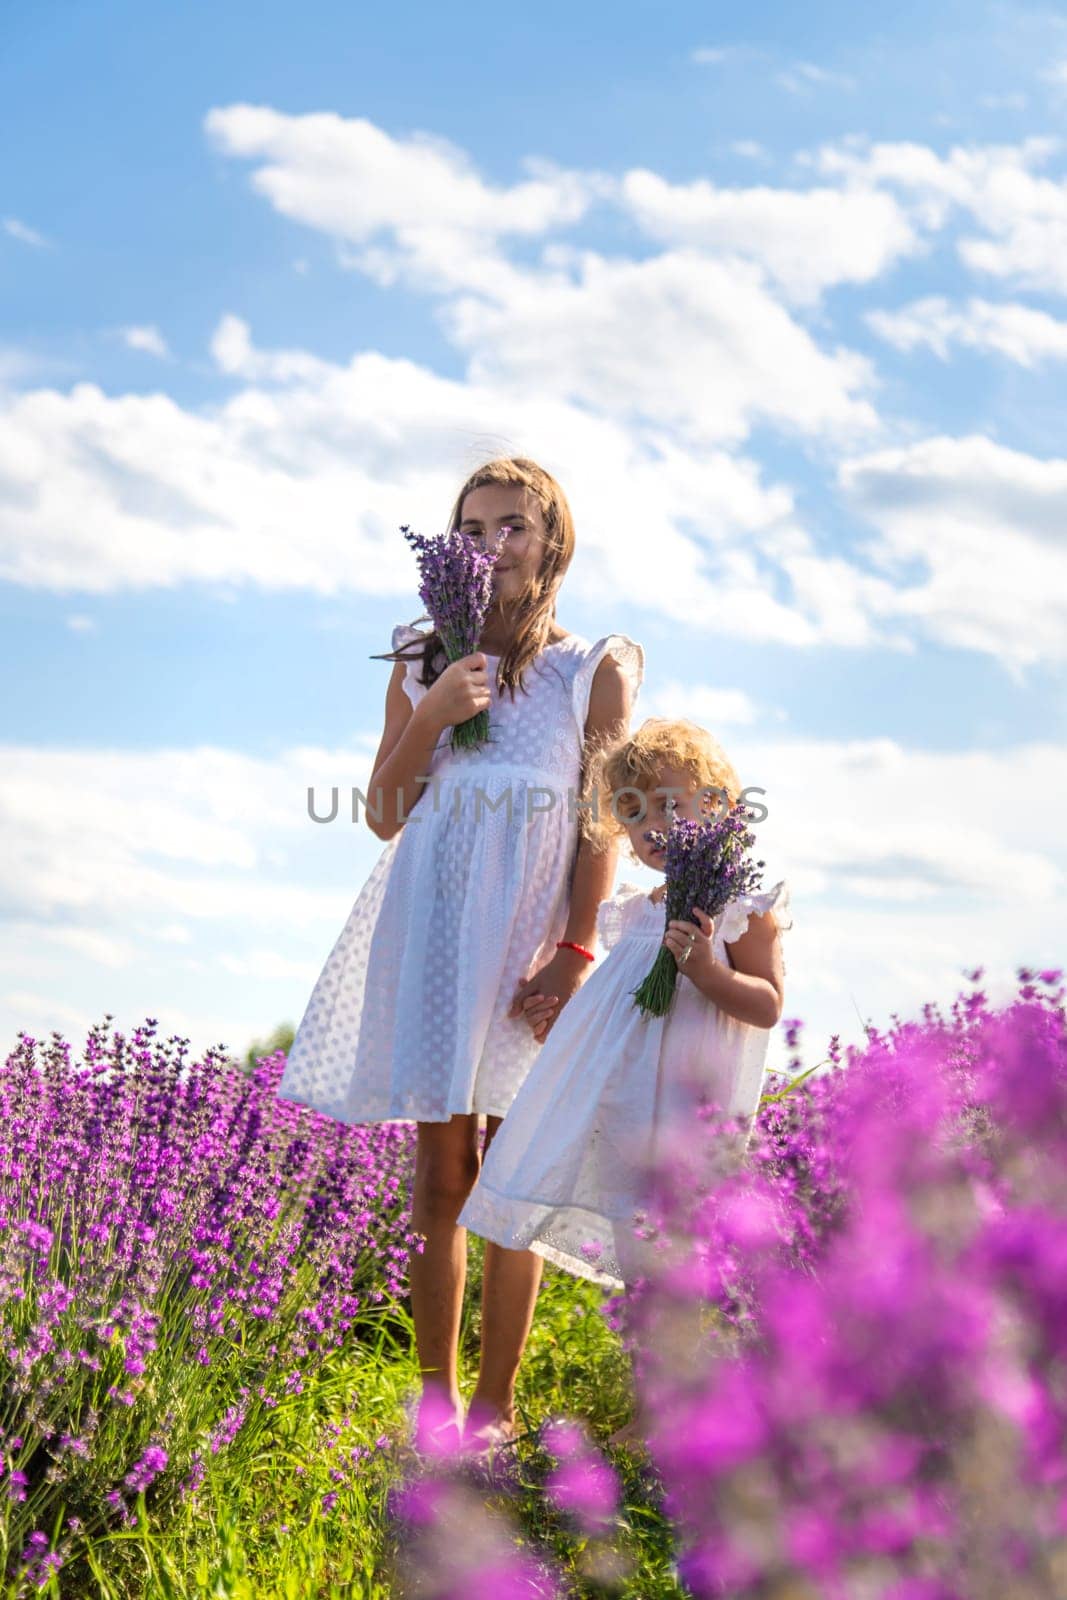 Children in a lavender field. Selective focus. by yanadjana